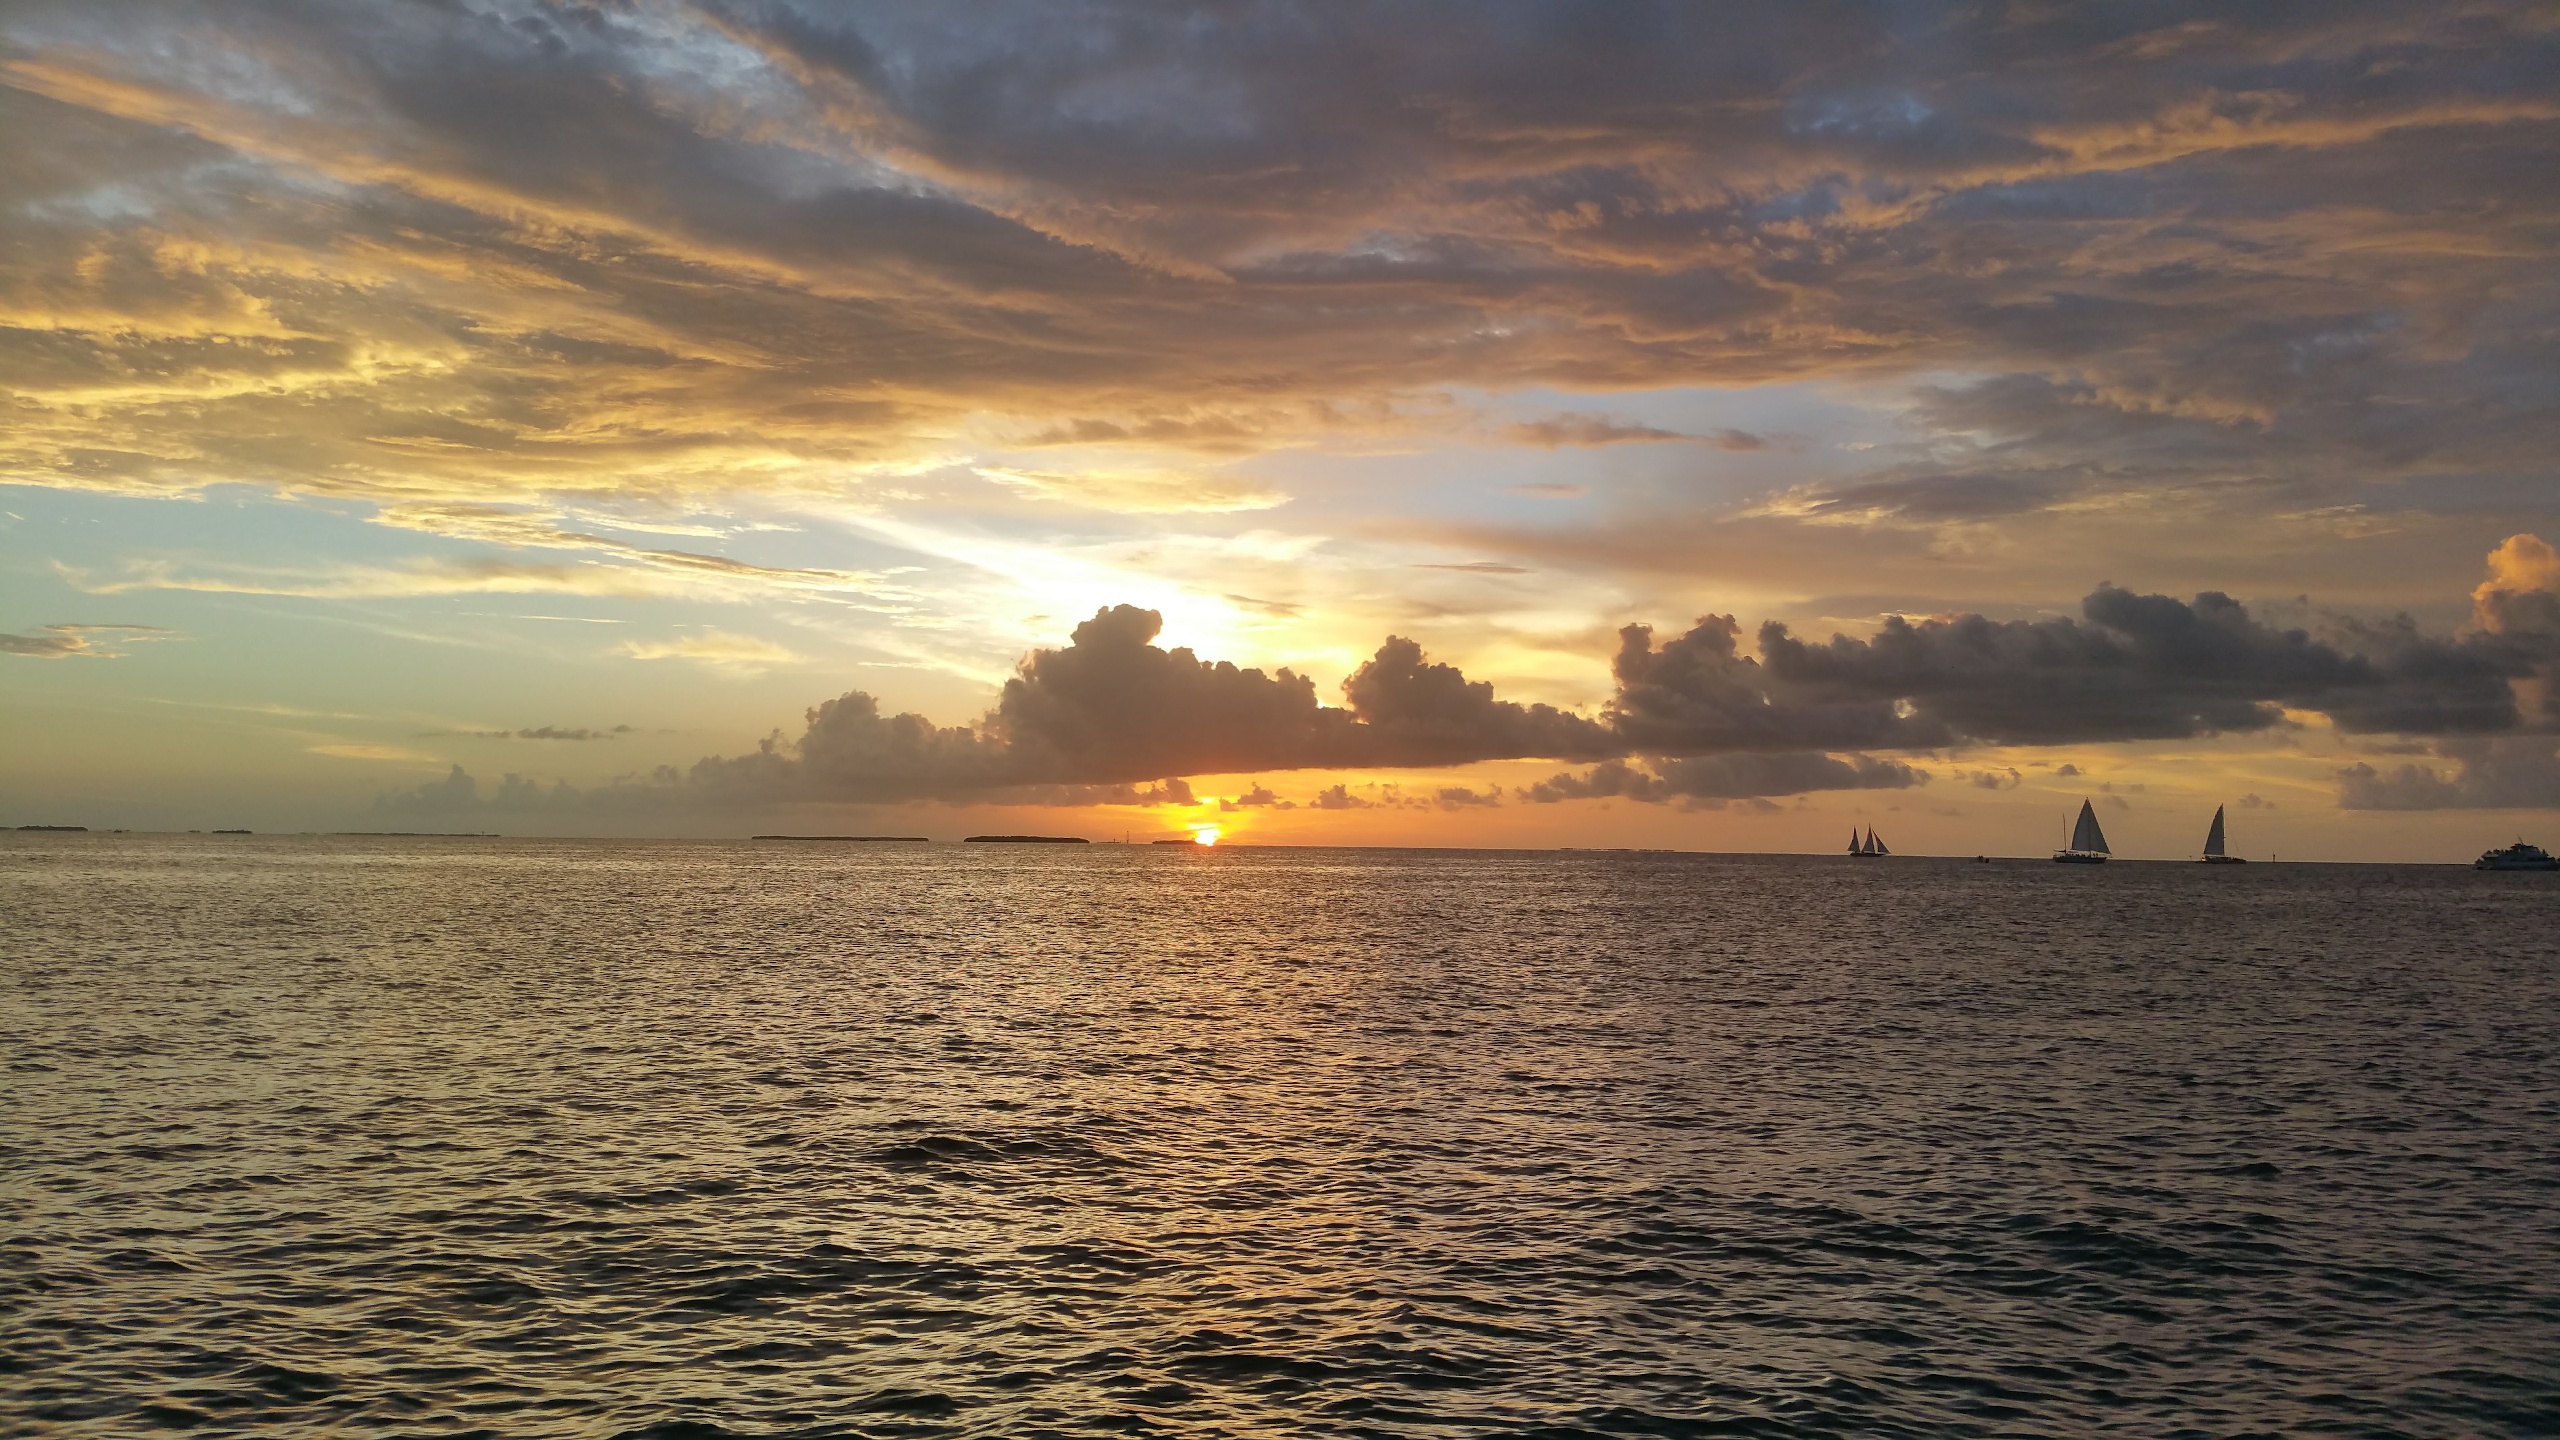 General 2560x1440 landscape sunset clouds nature horizon sea sailing ship